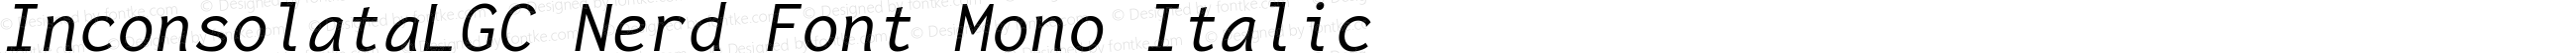 Inconsolata LGC Italic Nerd Font Complete Mono